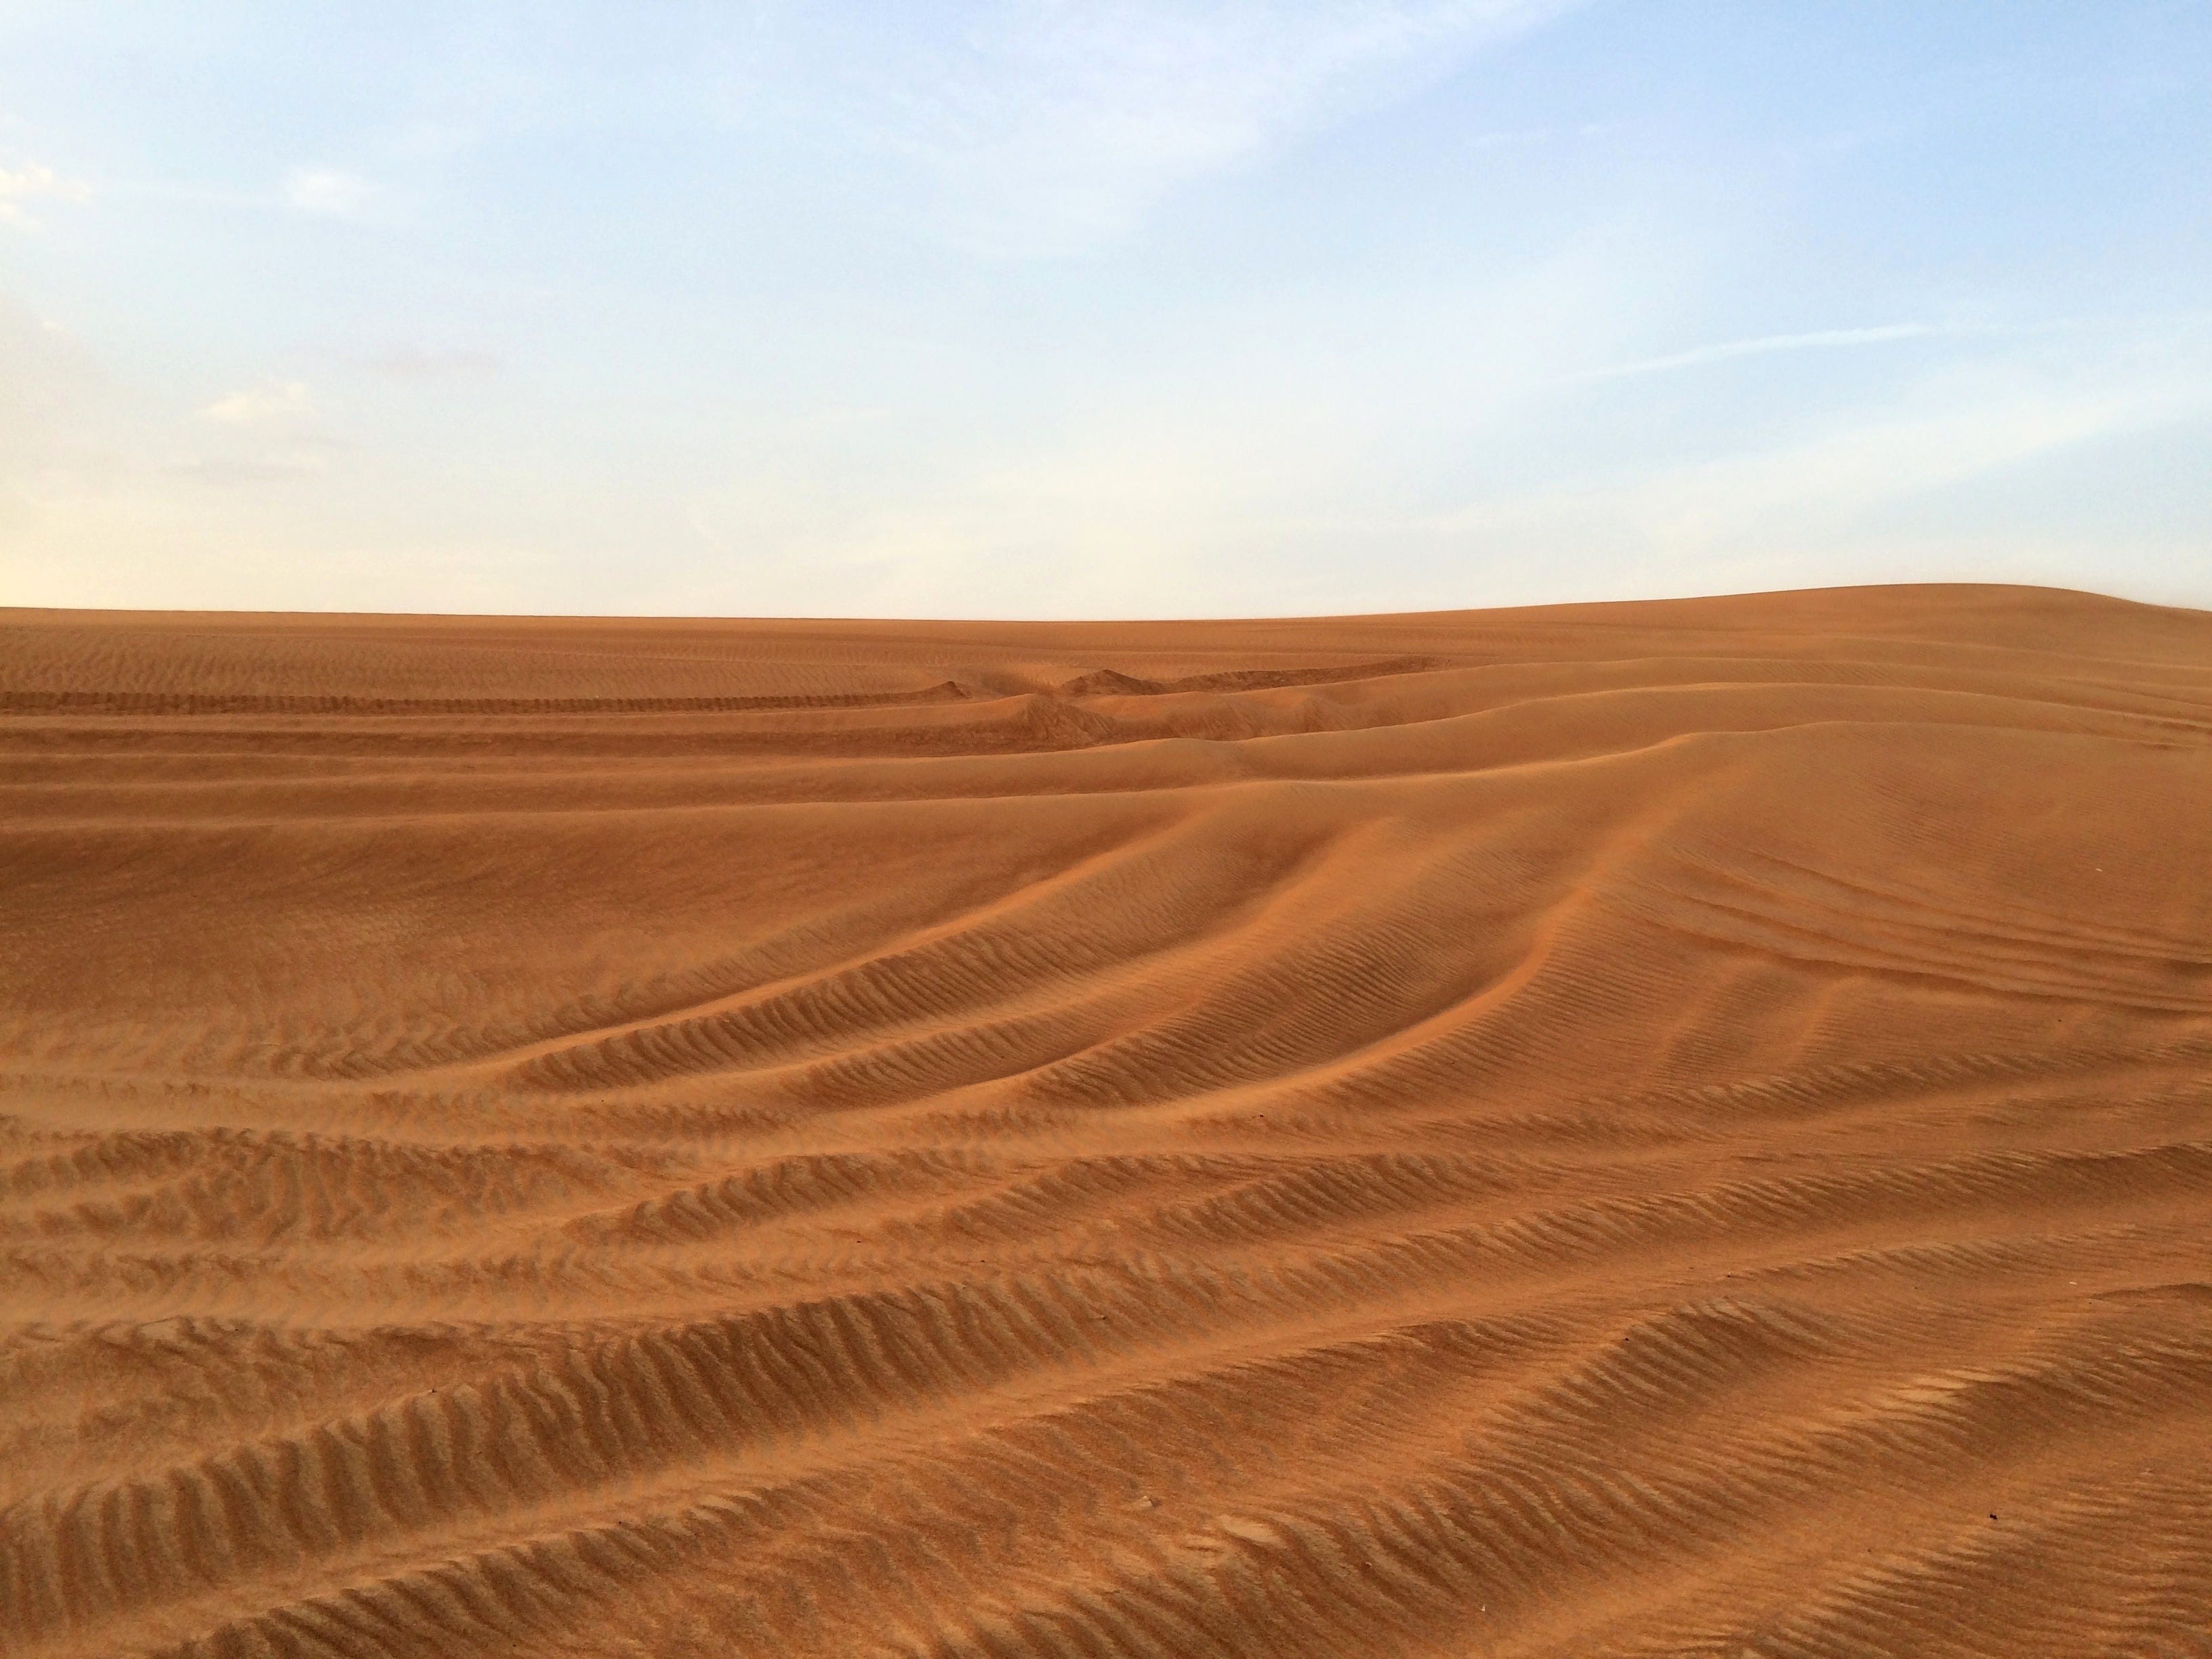 Arabian Desert - Wikipedia